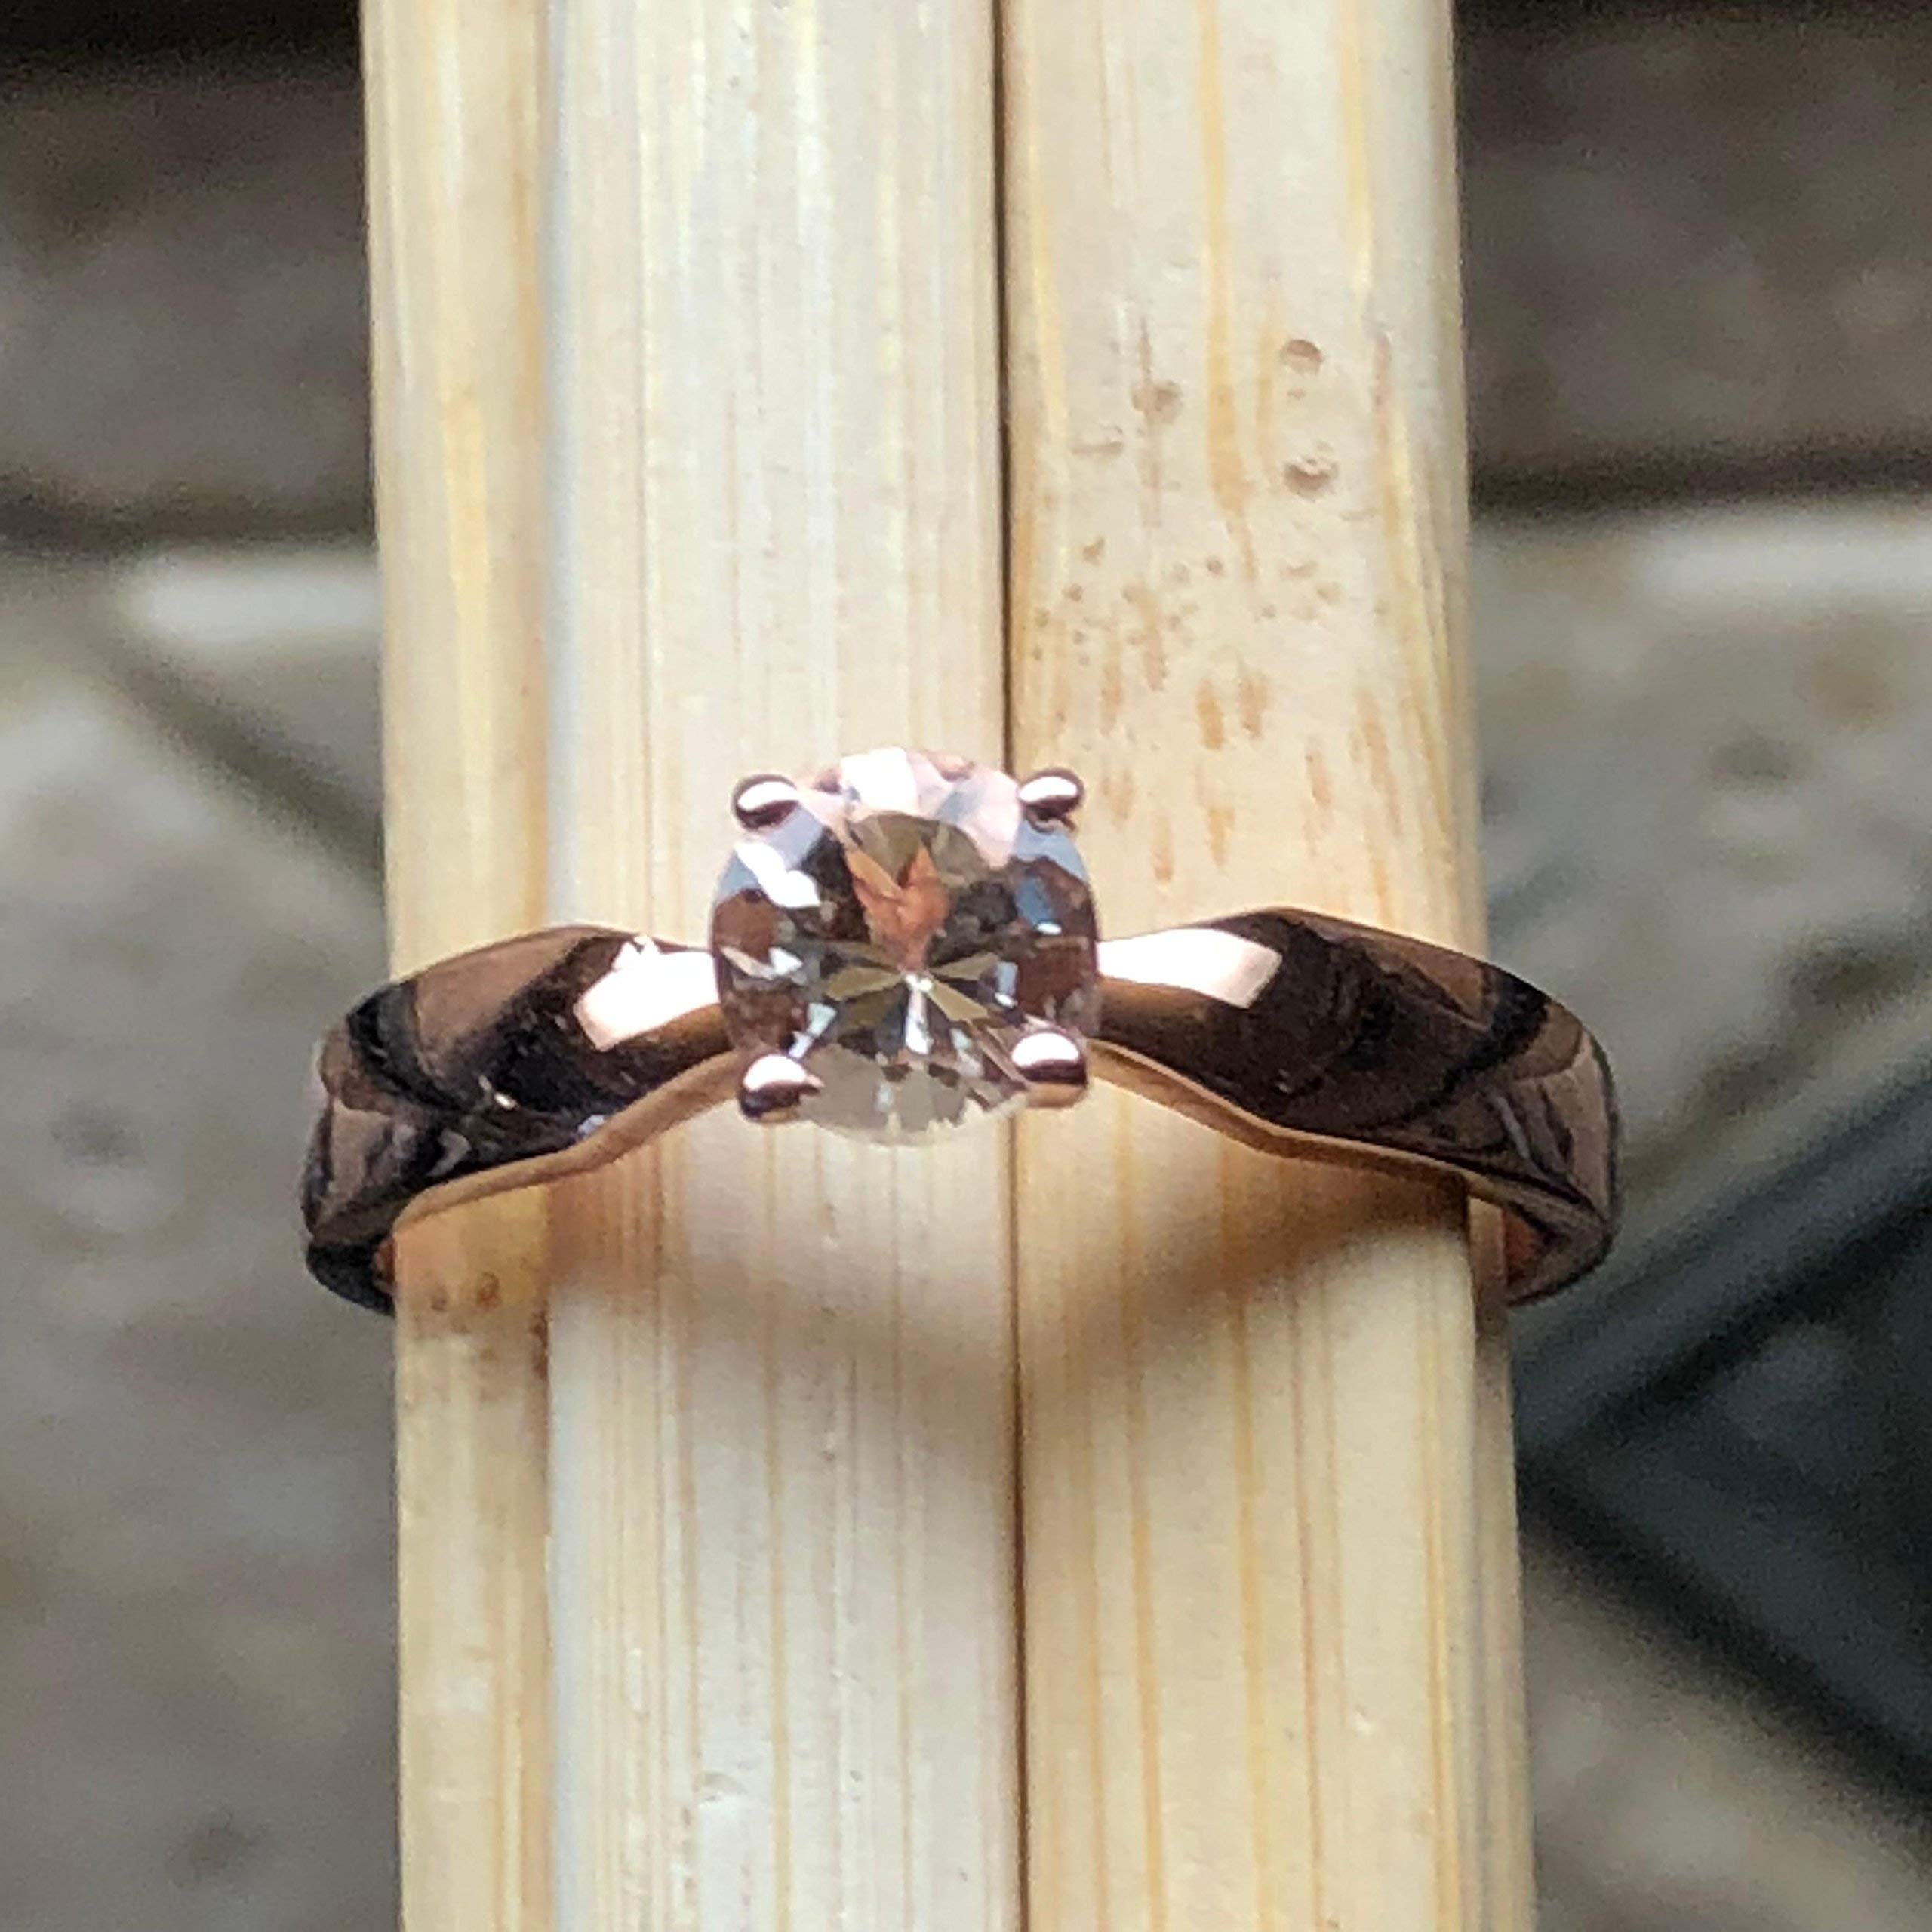 Natural Peach Morganite 14k Rose Gold Over Sterling Silver Engagement Ring Size 5, 6, 7, 8, 9 - Natural Rocks by Kala